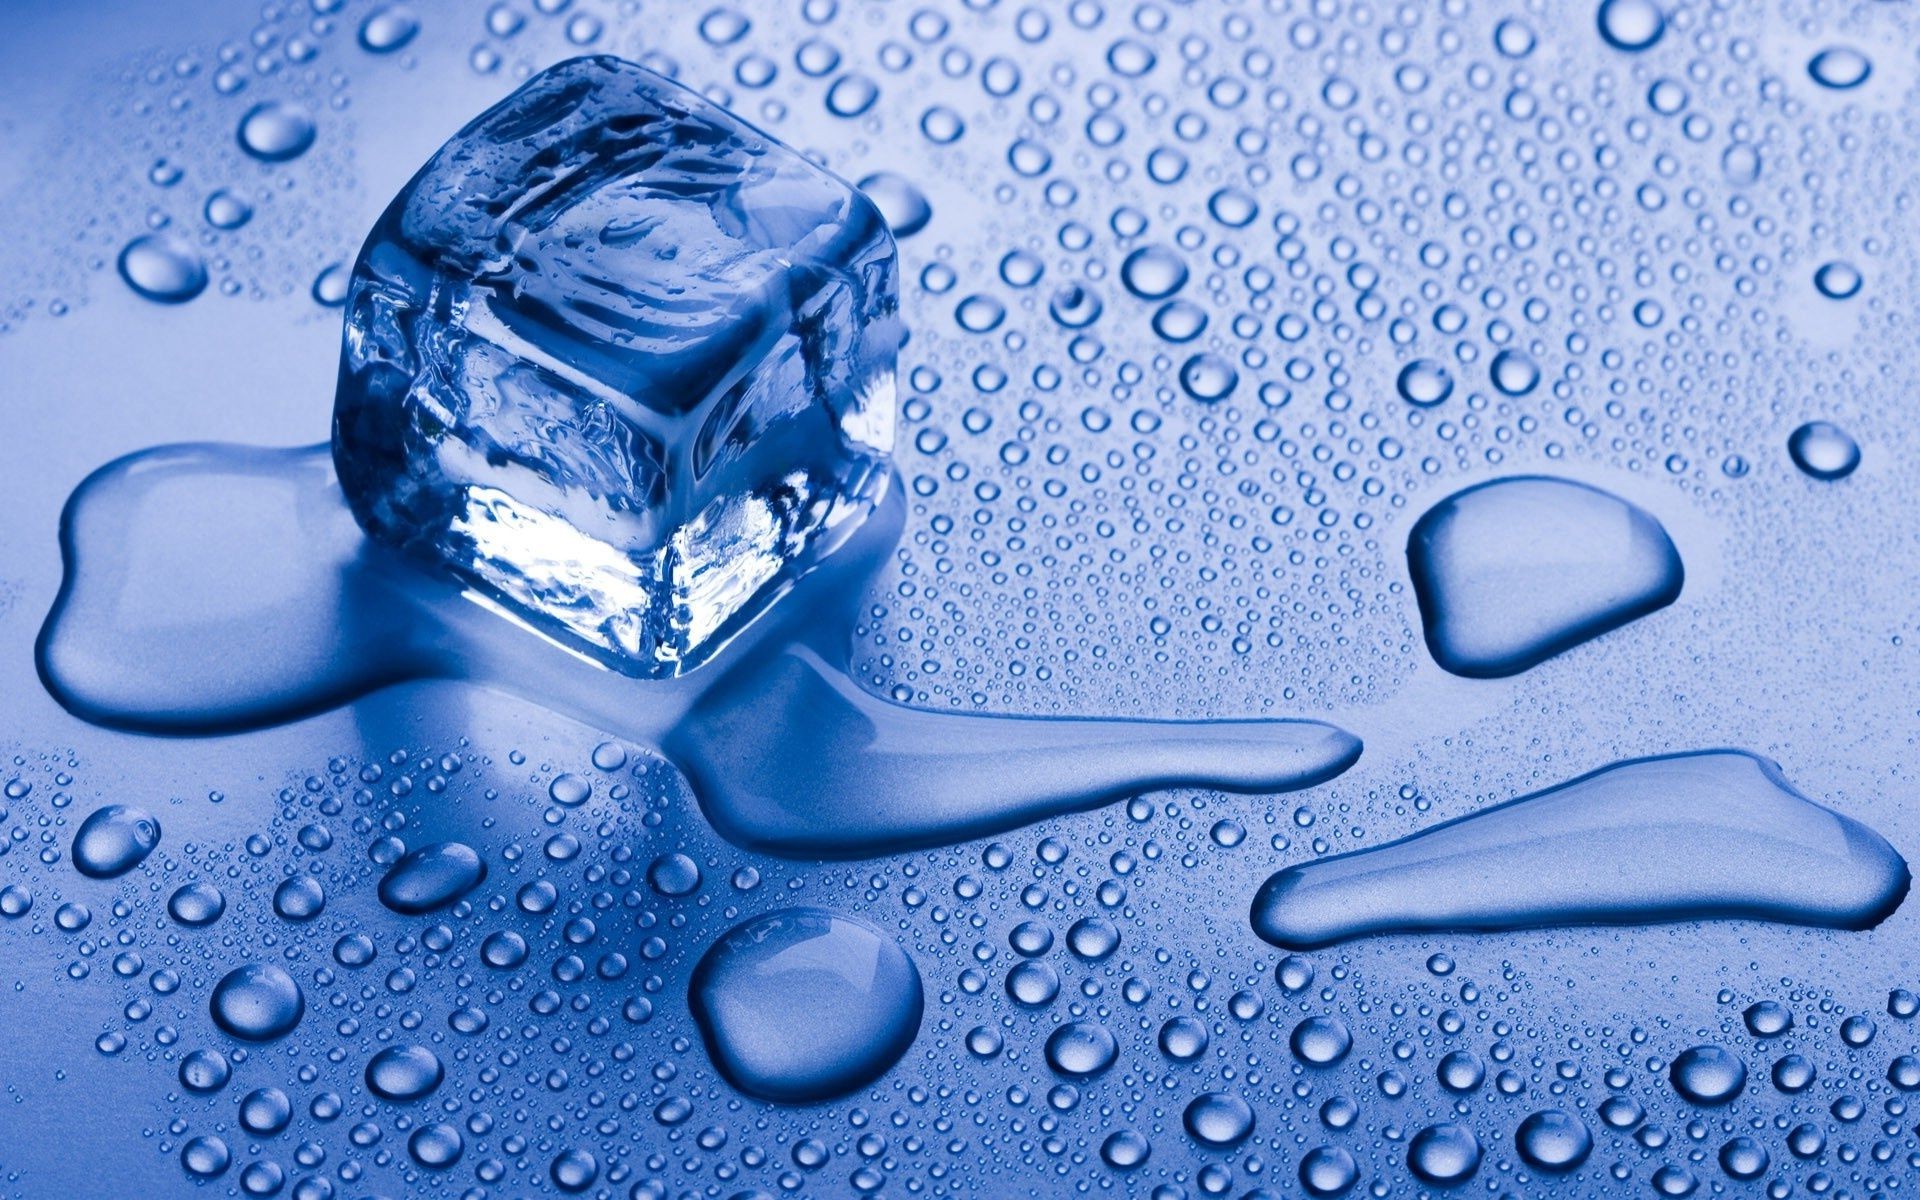 geometric shapes wet drop liquid rain bubble clean water droplet splash turquoise clear purity drink dew wash ripple pure glass cold bath